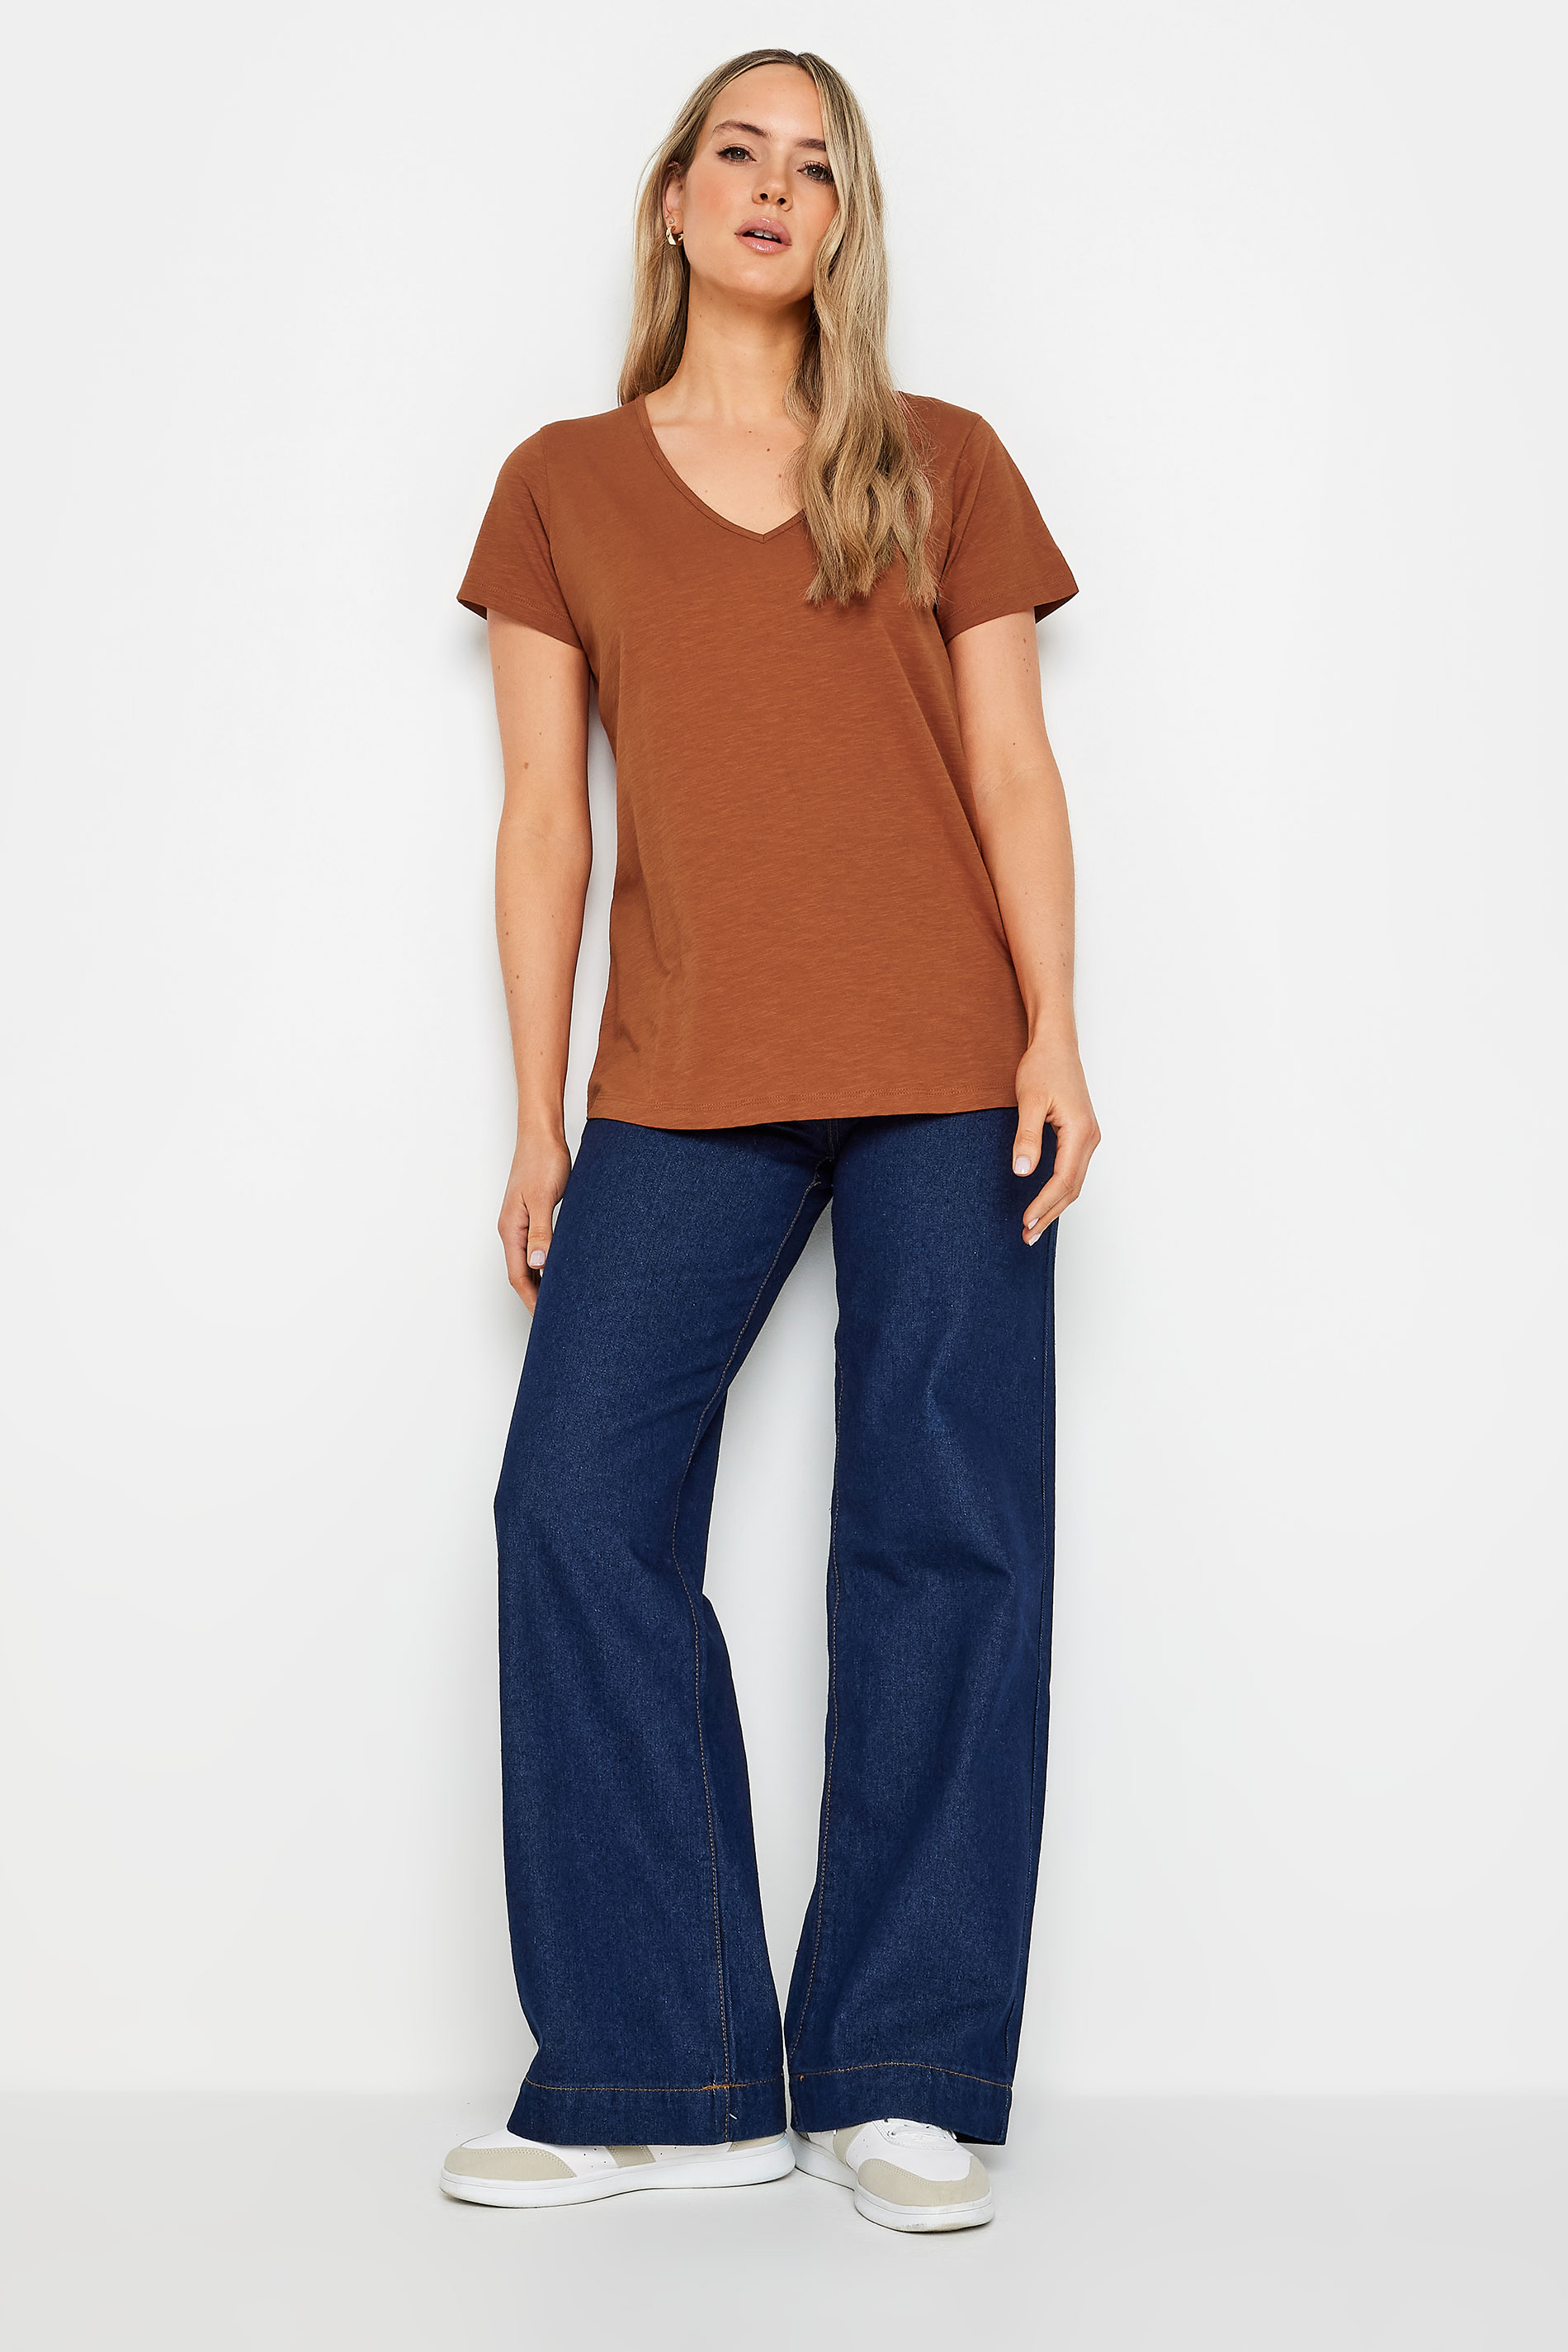 LTS Tall Womens Rust Orange V-Neck T-Shirt | Long Tall Sally 2